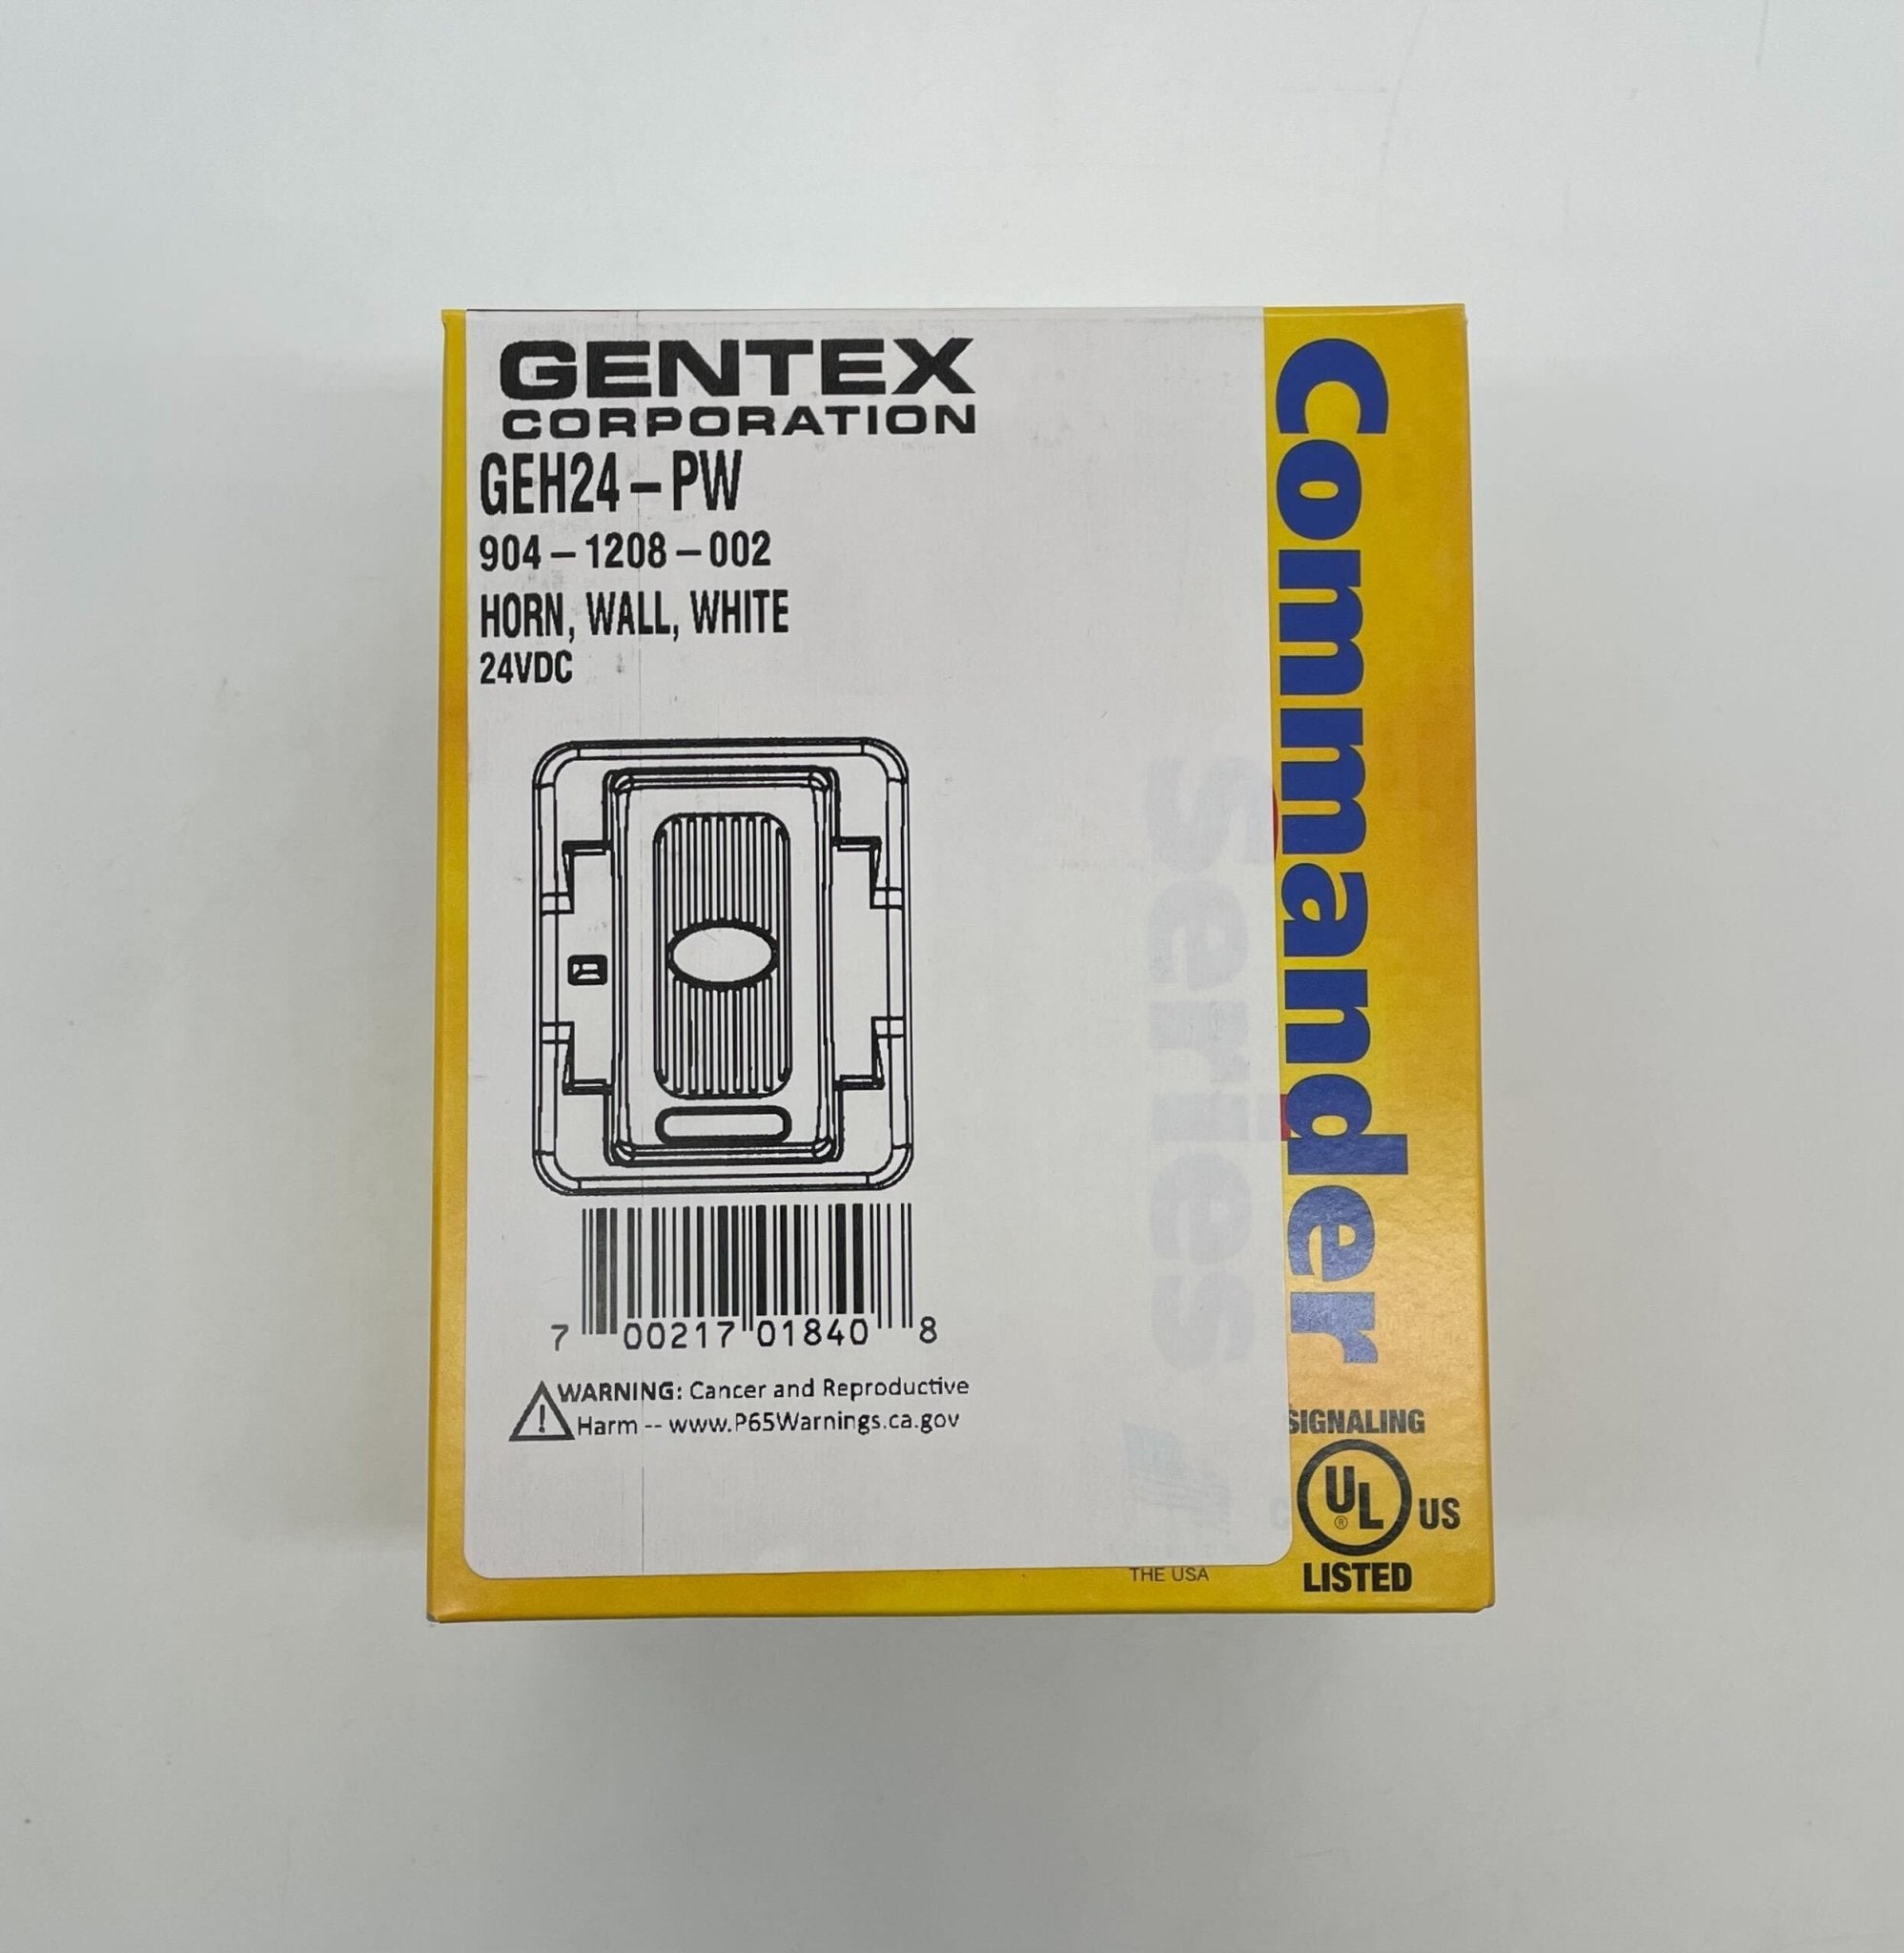 Gentex GEH24-PW - The Fire Alarm Supplier